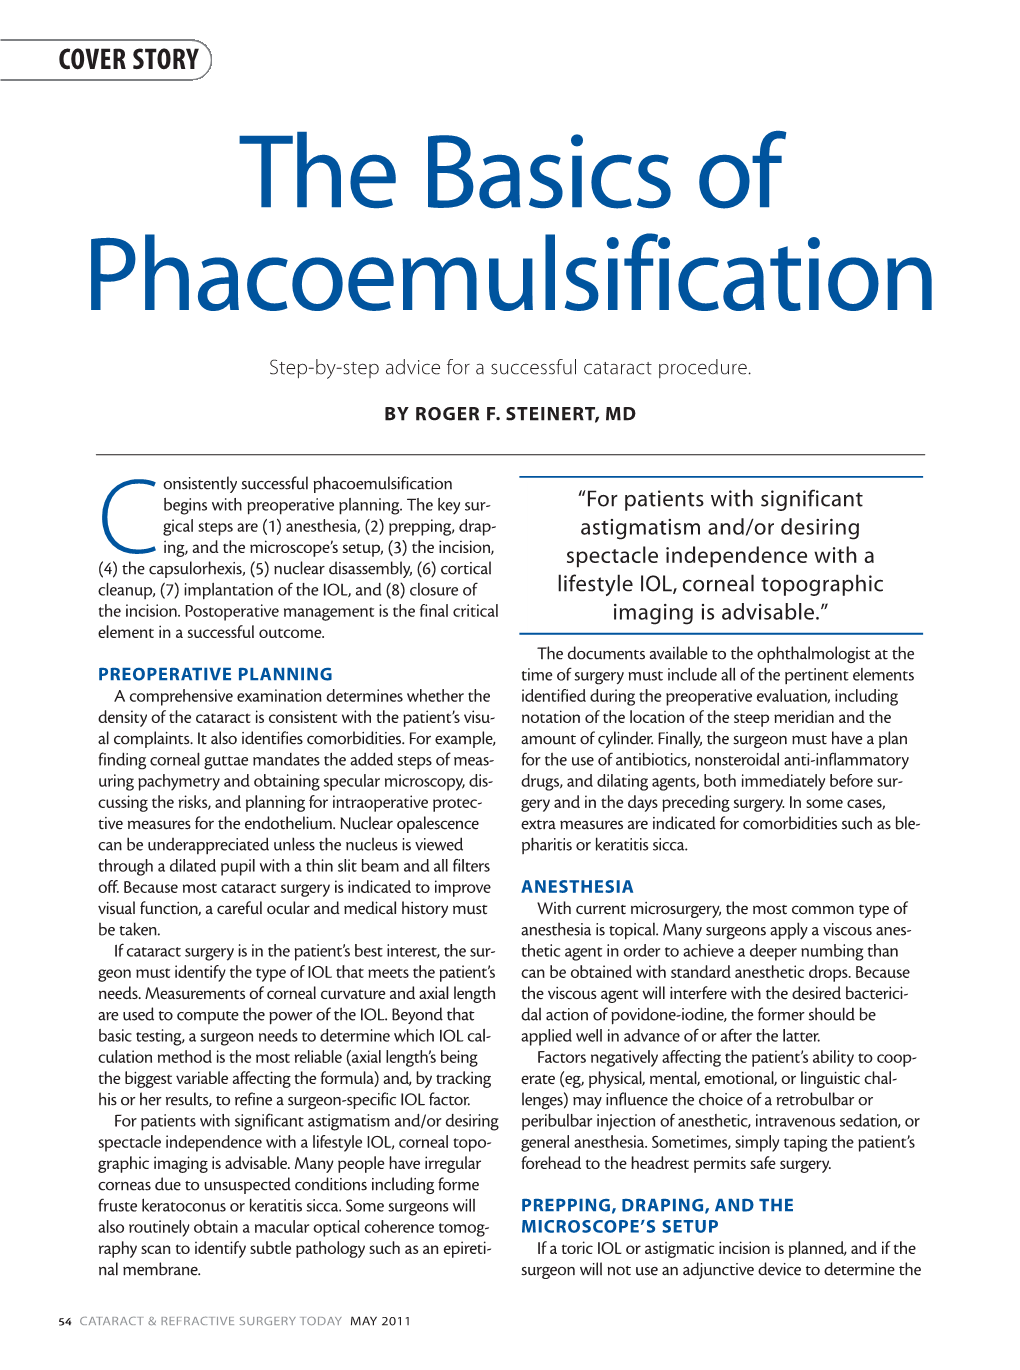 The Basics of Phacoemulsification